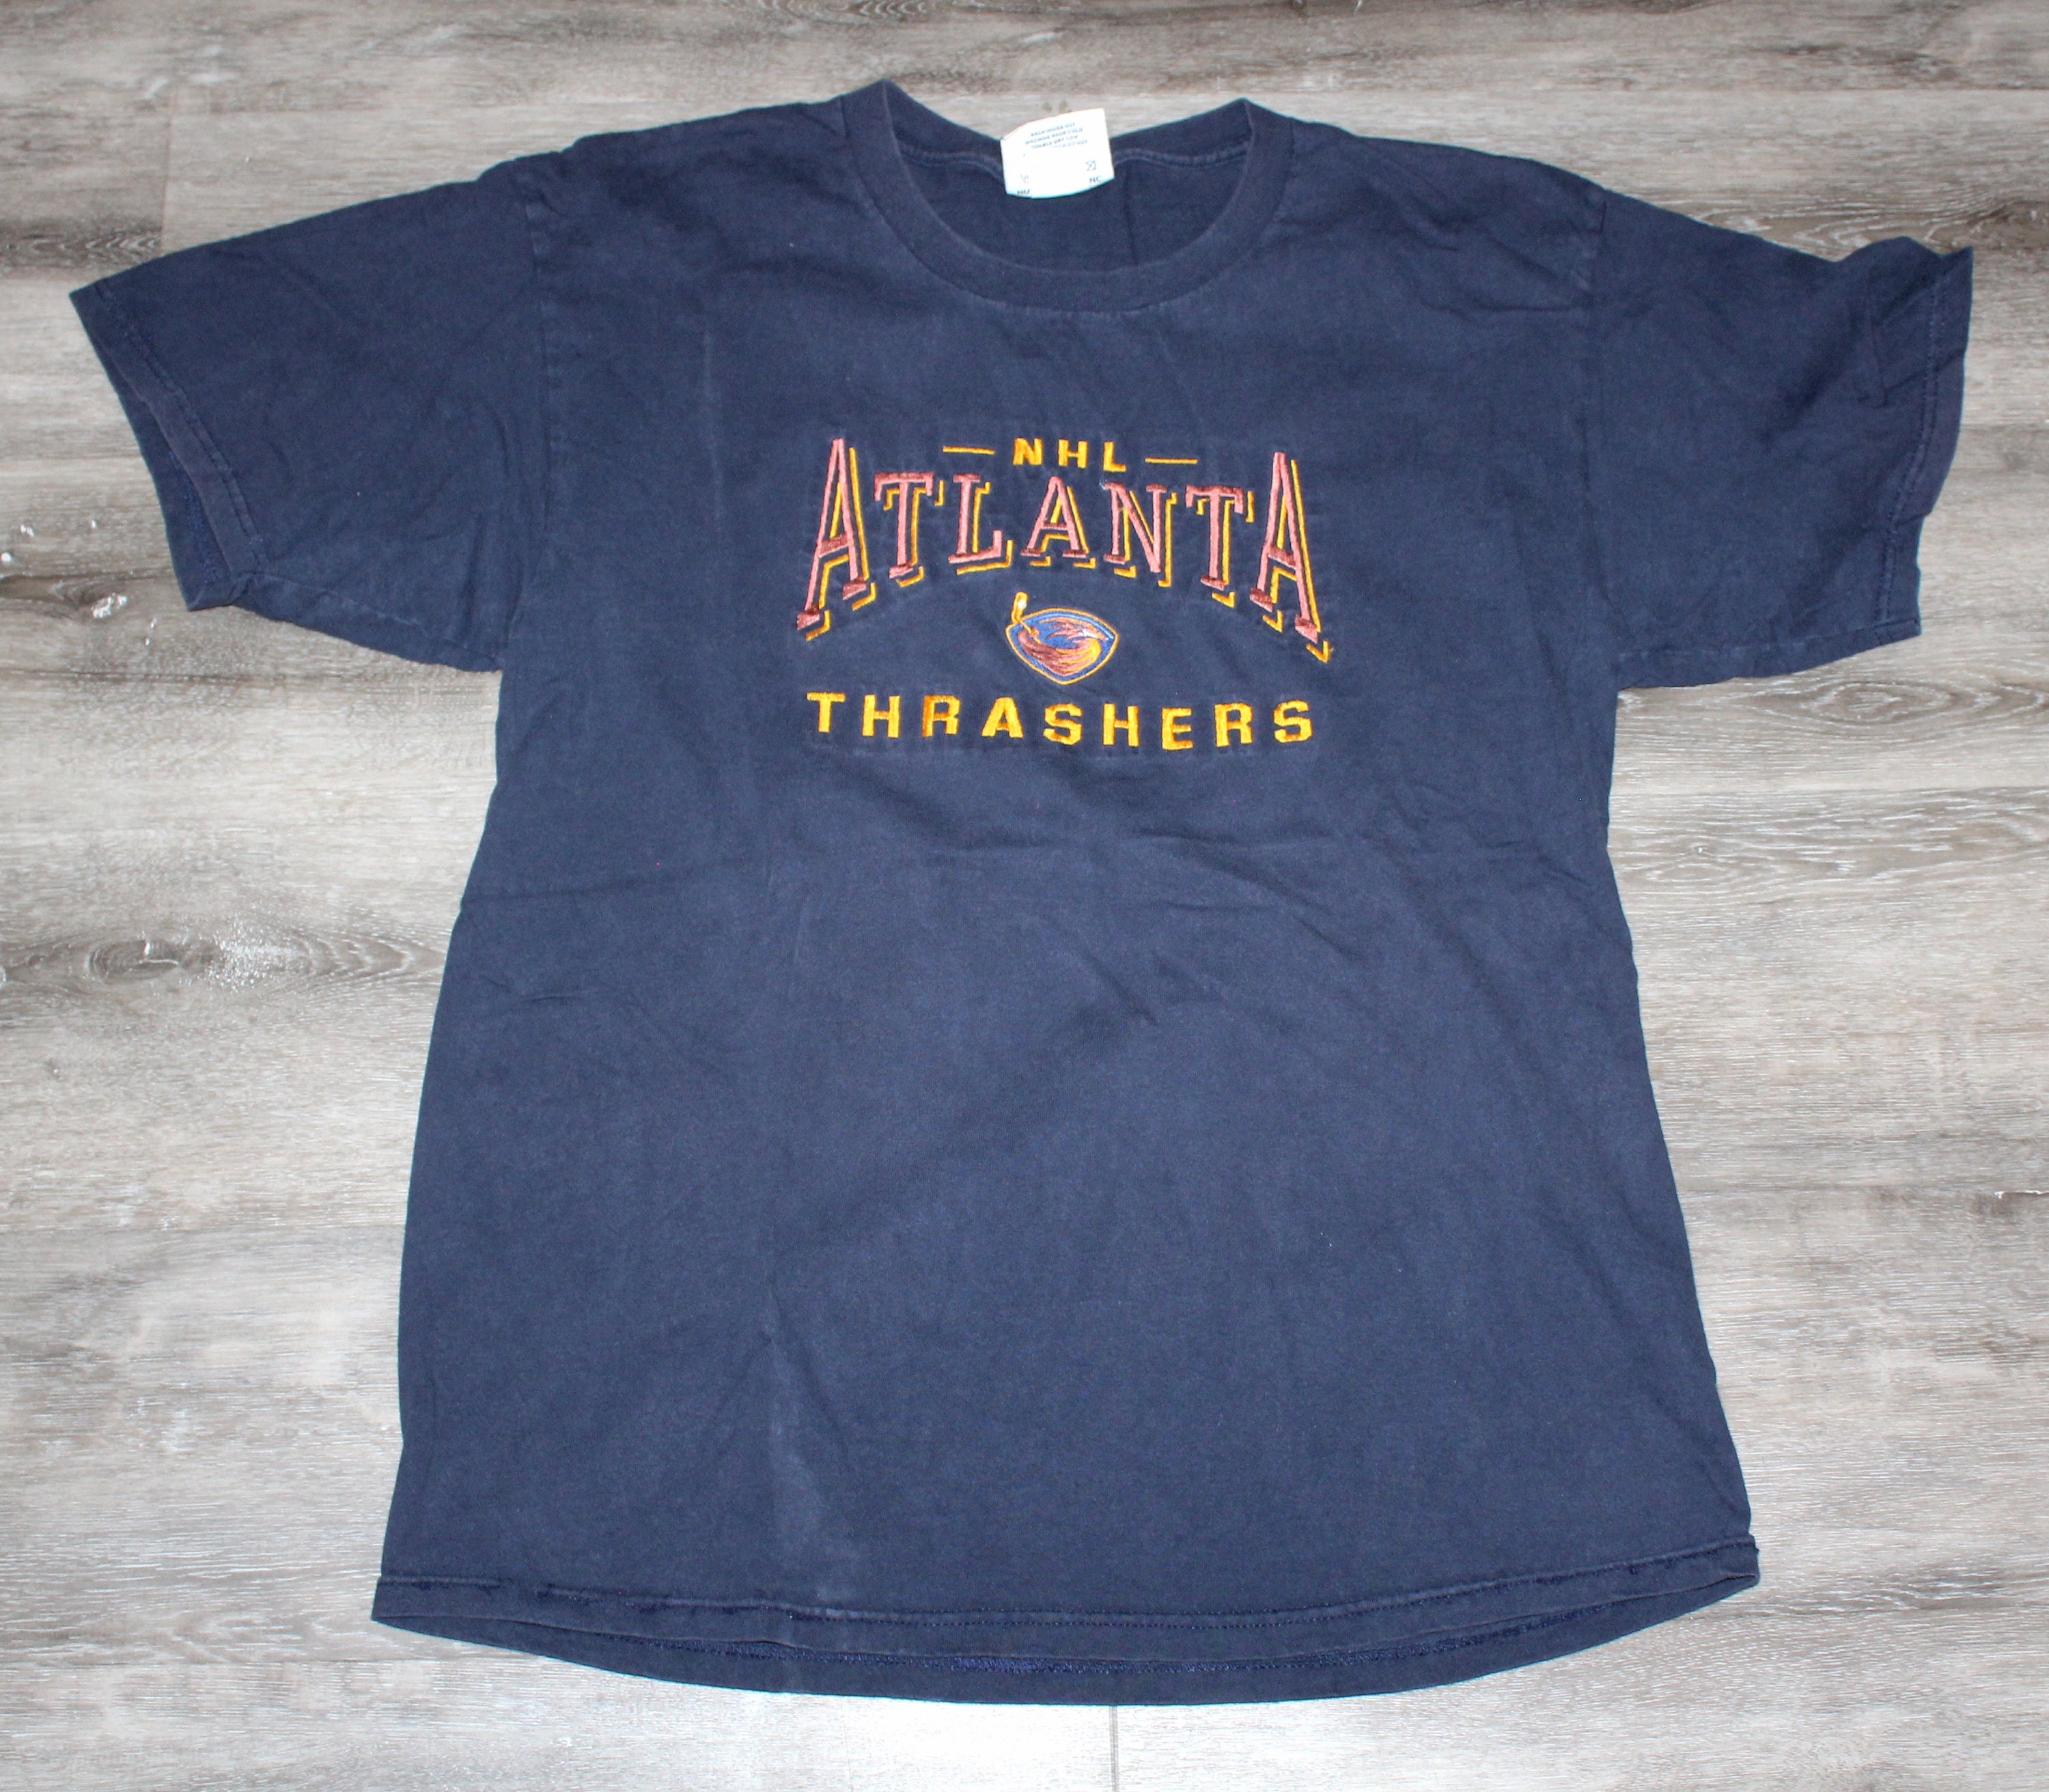 Atlanta Thrashers - Third Jersey Concept by Gojira5000 on DeviantArt